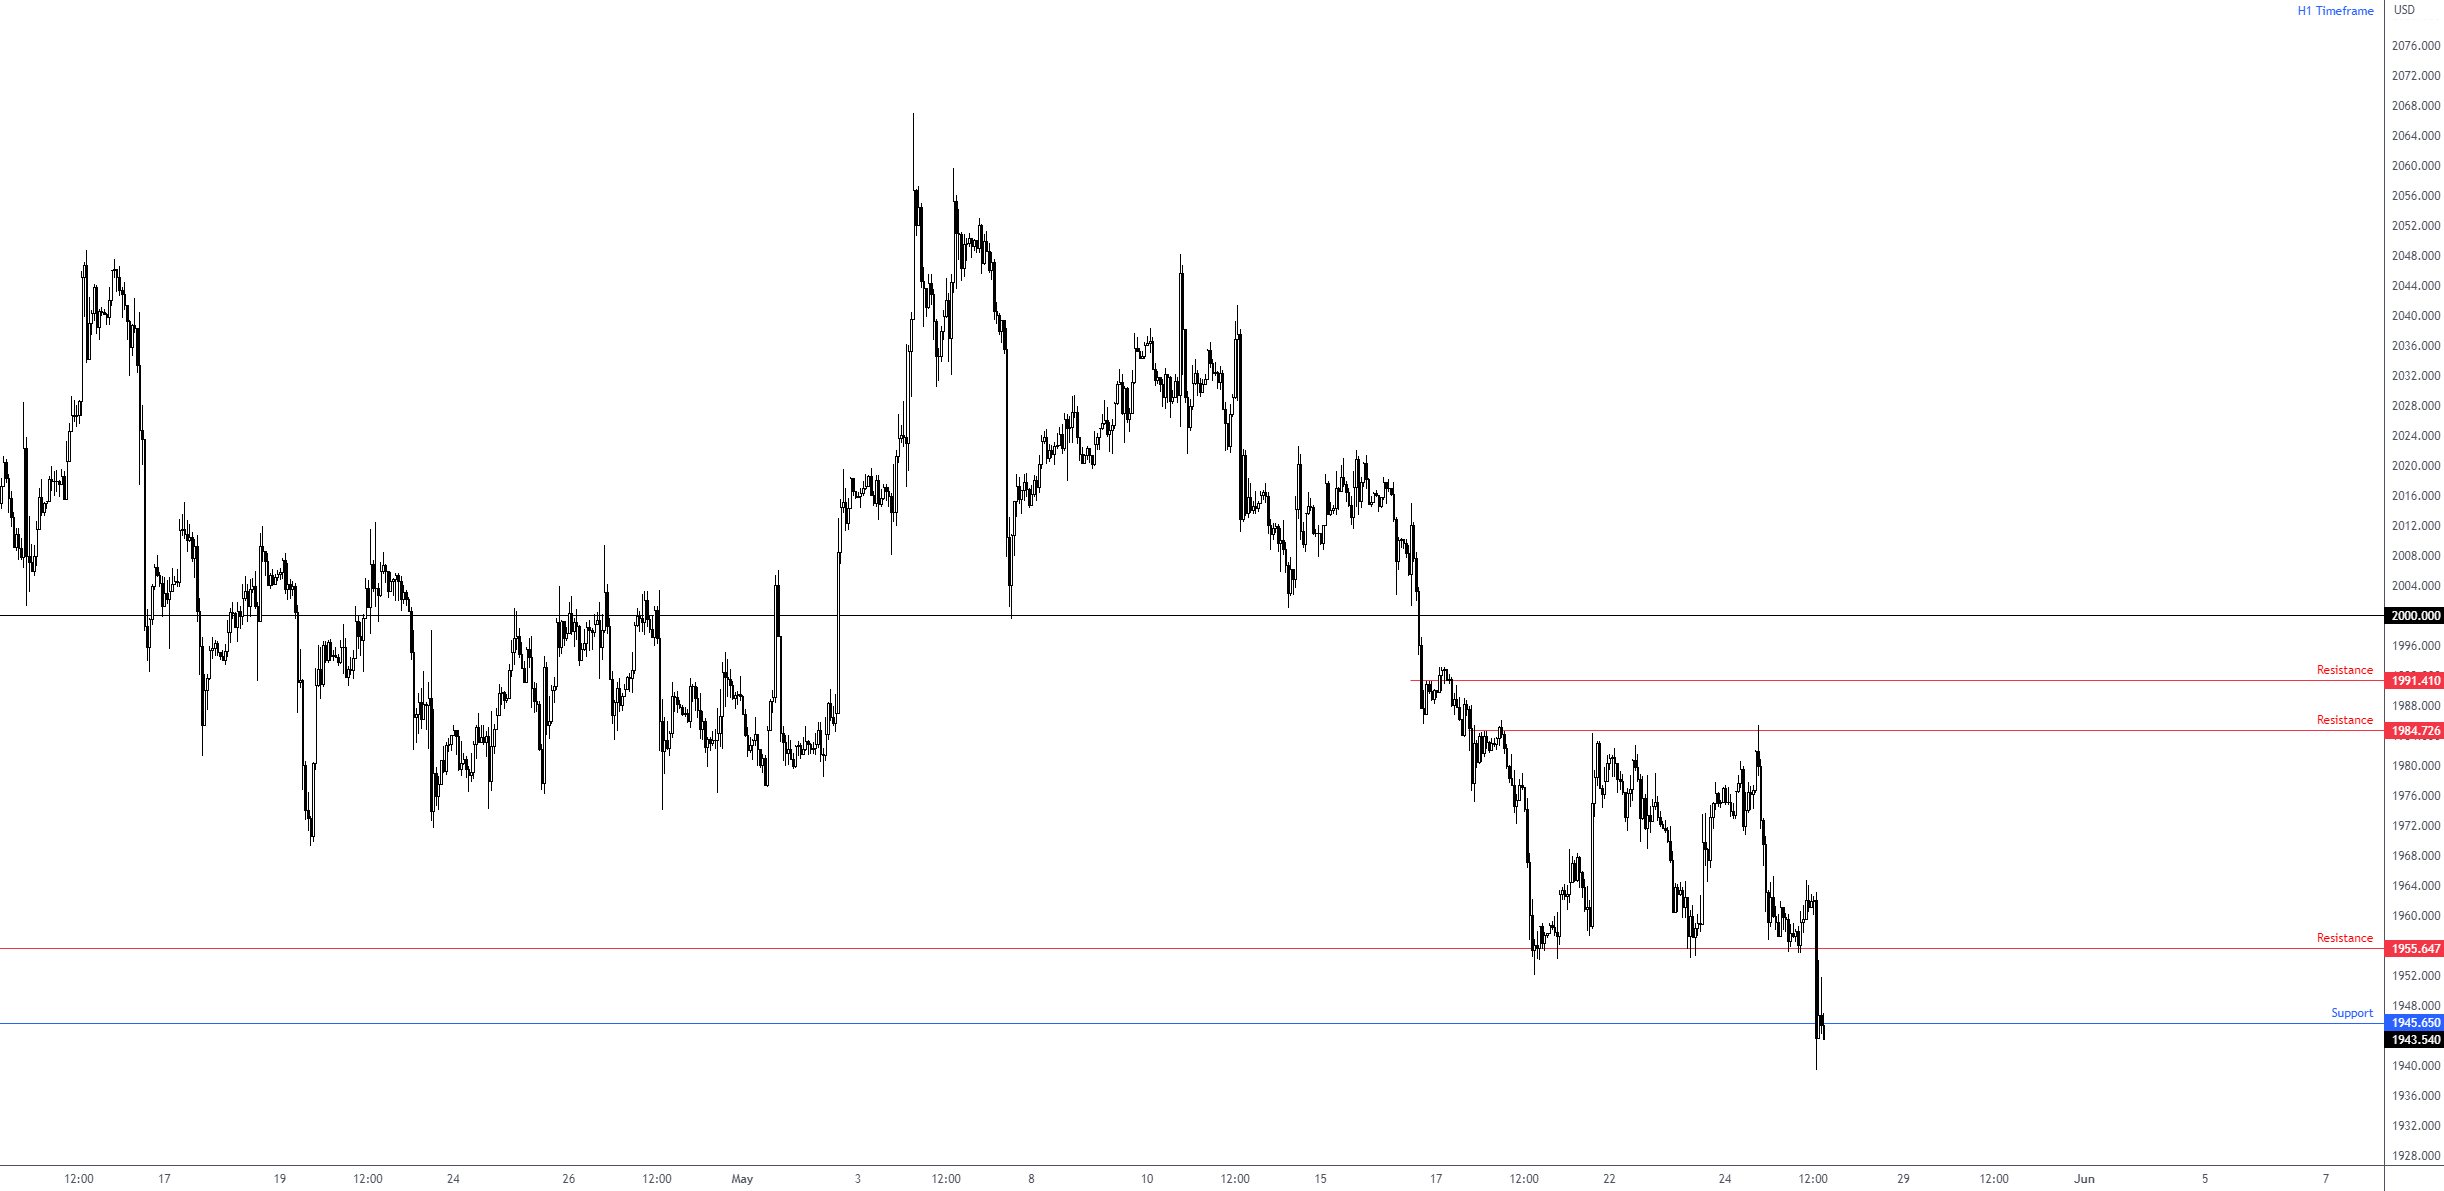 XAU/USD Appears Vulnerable, FP Markets